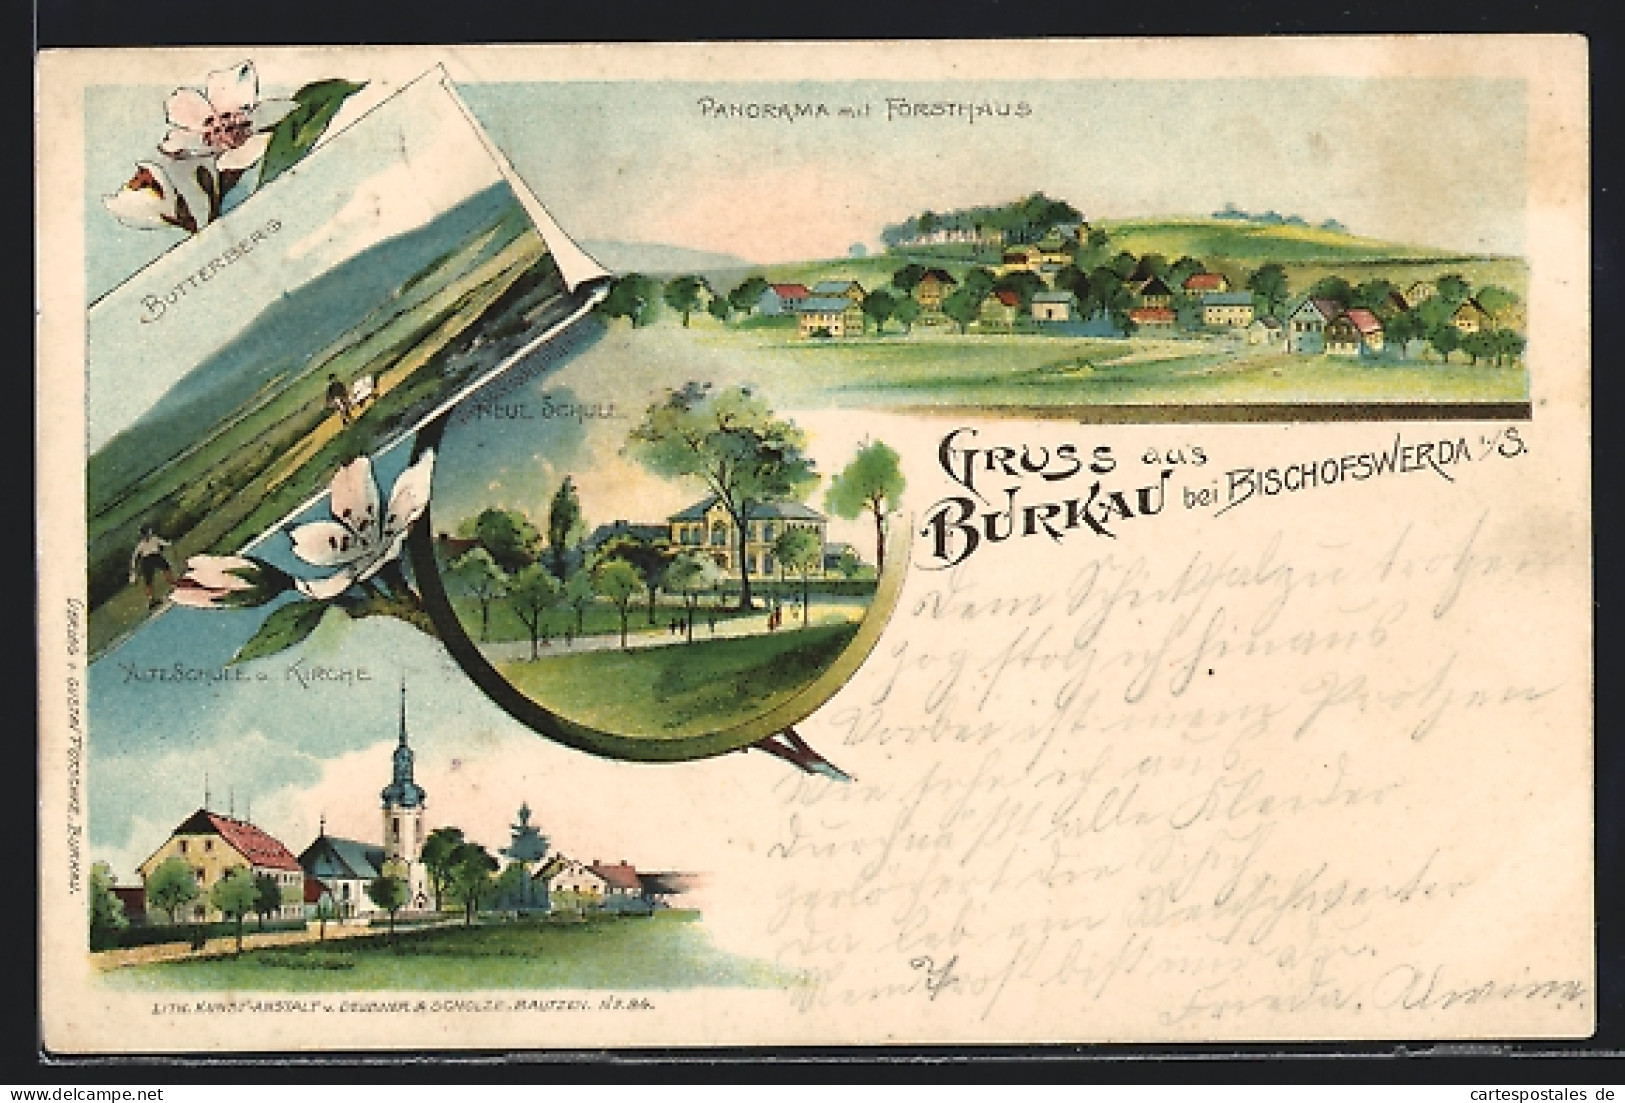 Lithographie Burkau Bei Bischofswerda, Alte Schule U. Kirche, Butterberg, Panorama Mit Forsthaus  - Chasse